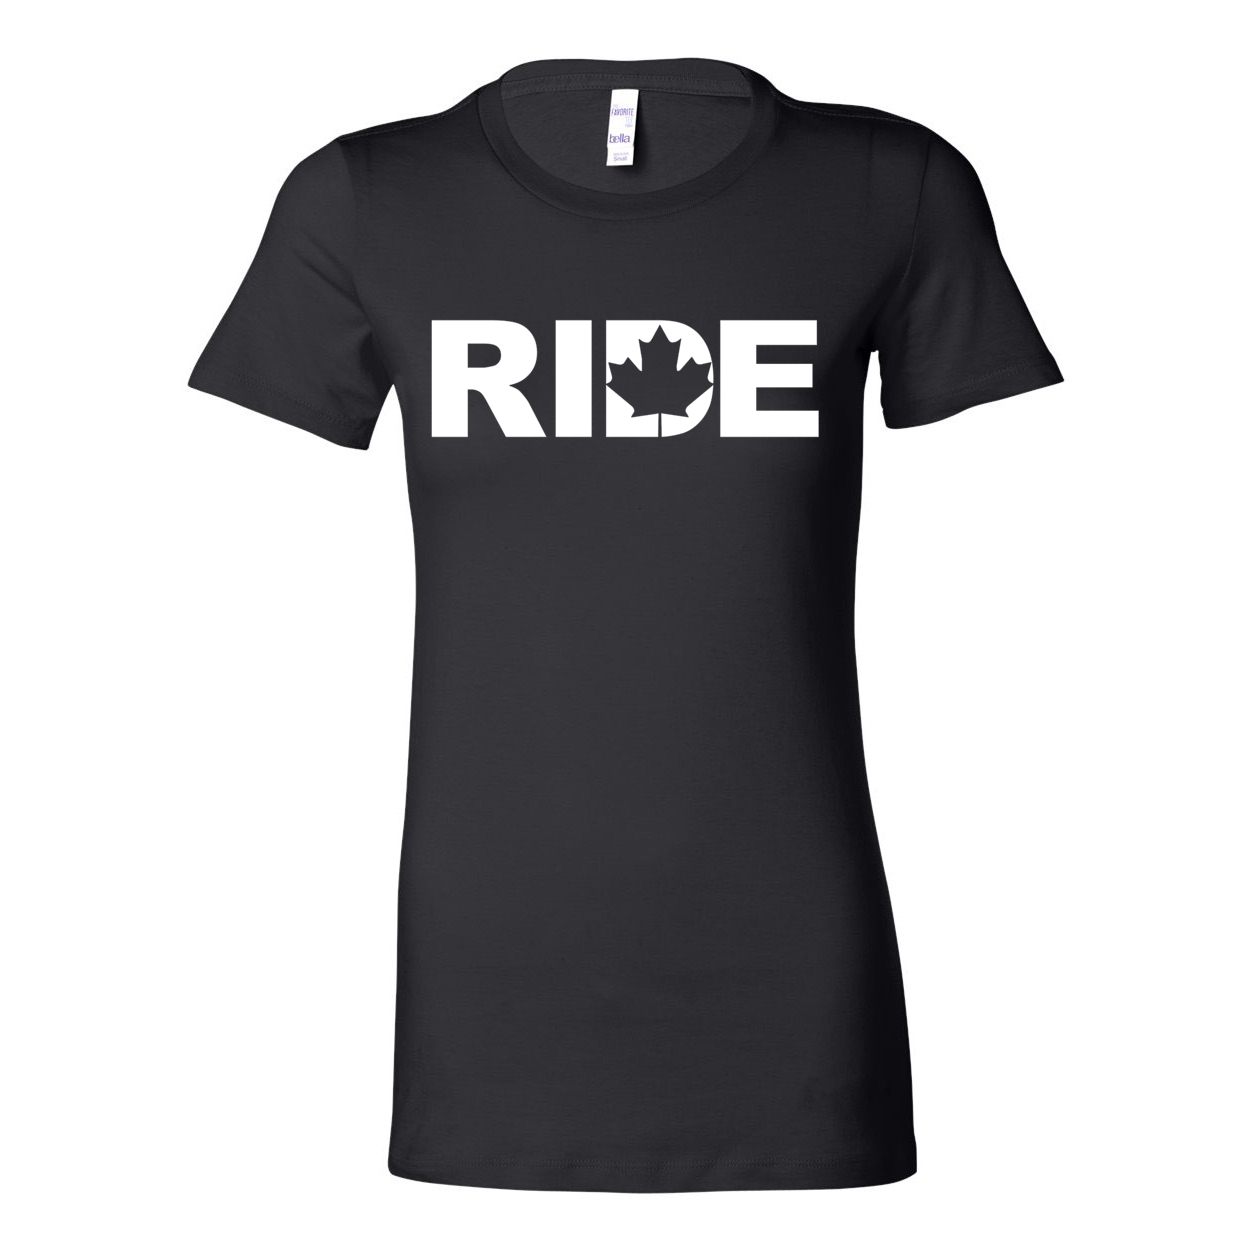 Ride Canada Classic Women's Fitted Tri-Blend T-Shirt Black (White Logo)